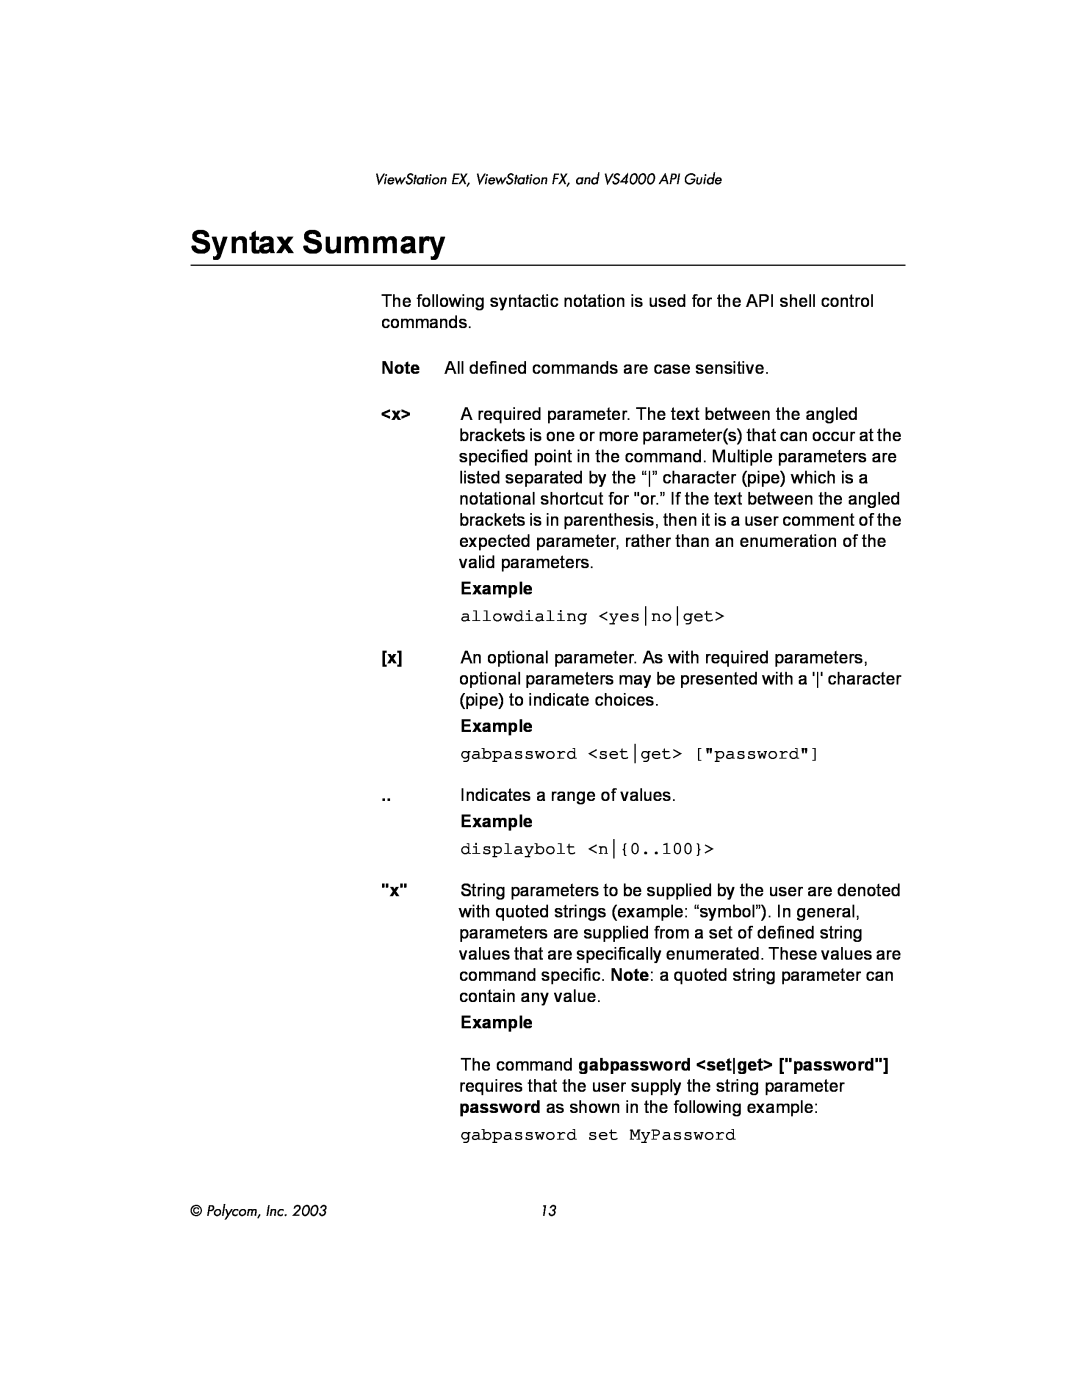 Polycom VIEWSTATION EX manual Syntax Summary, Example 